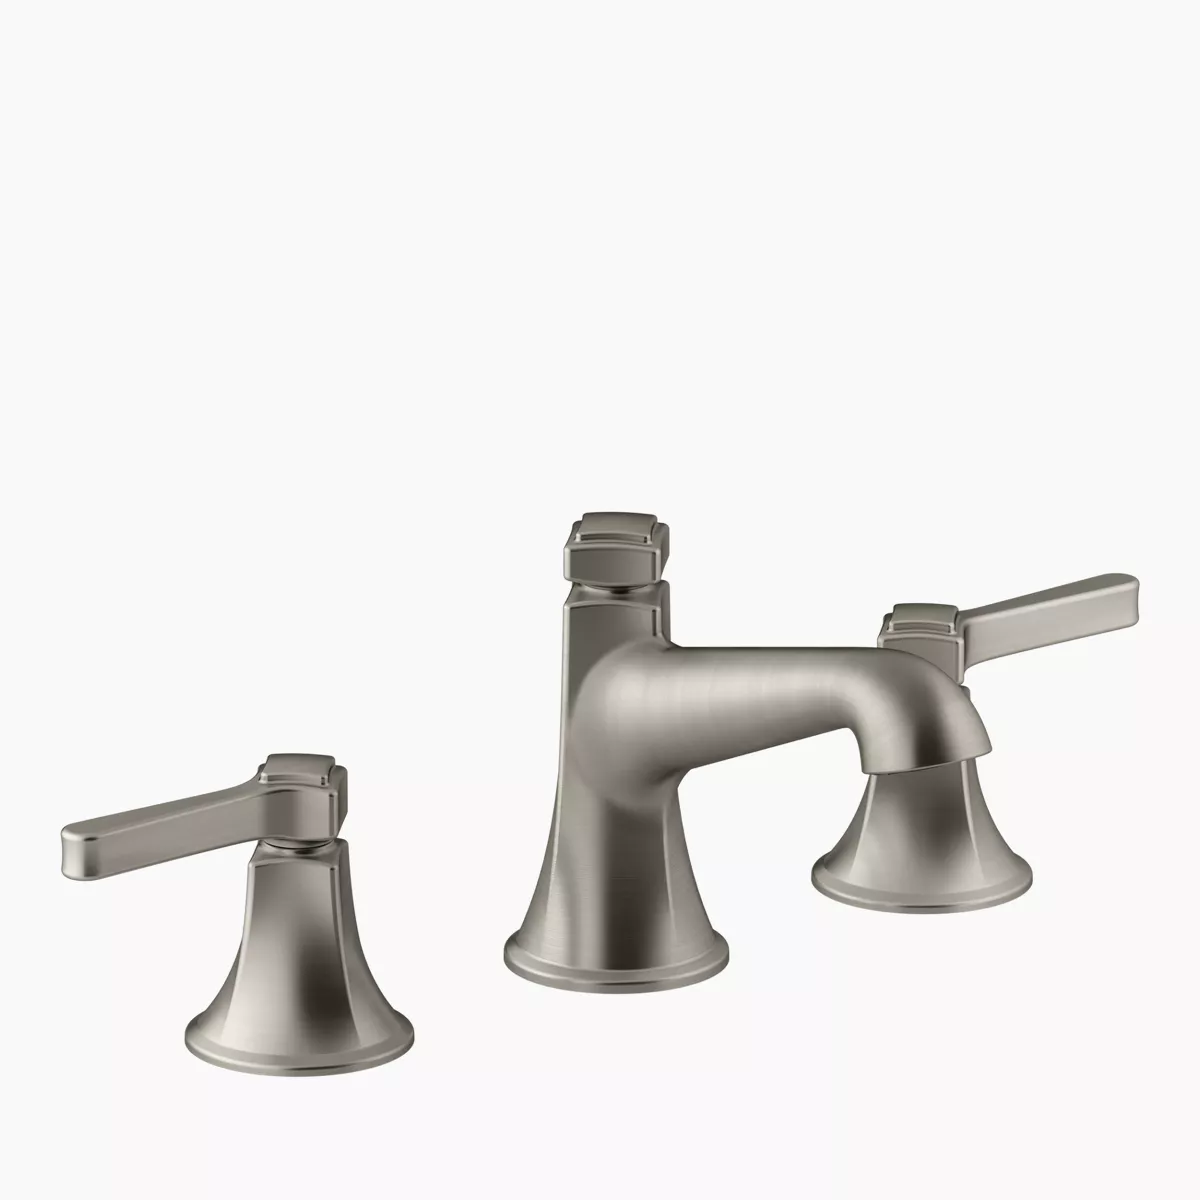 KOHLER | K-2293-8 | Wellworth Pedestal Sink with 8-Inch Centers